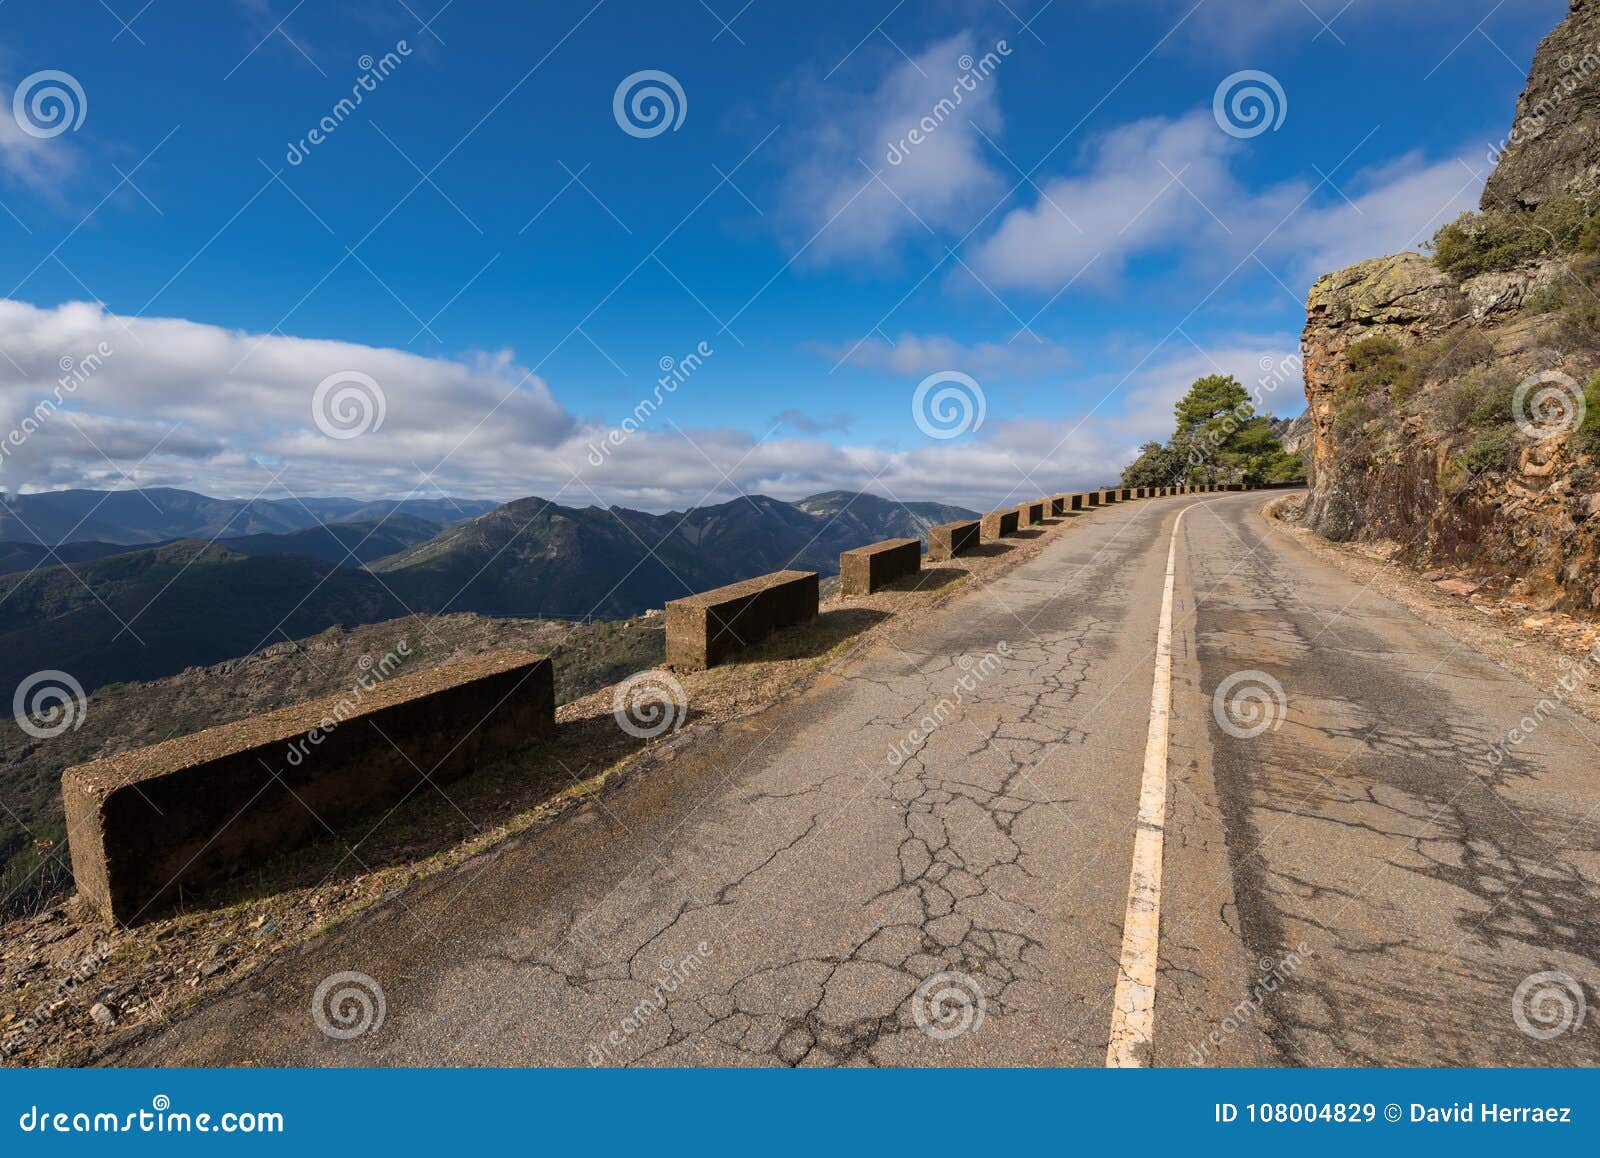 road in mountain landscape in las batuecas natural park in salamanca, spain.